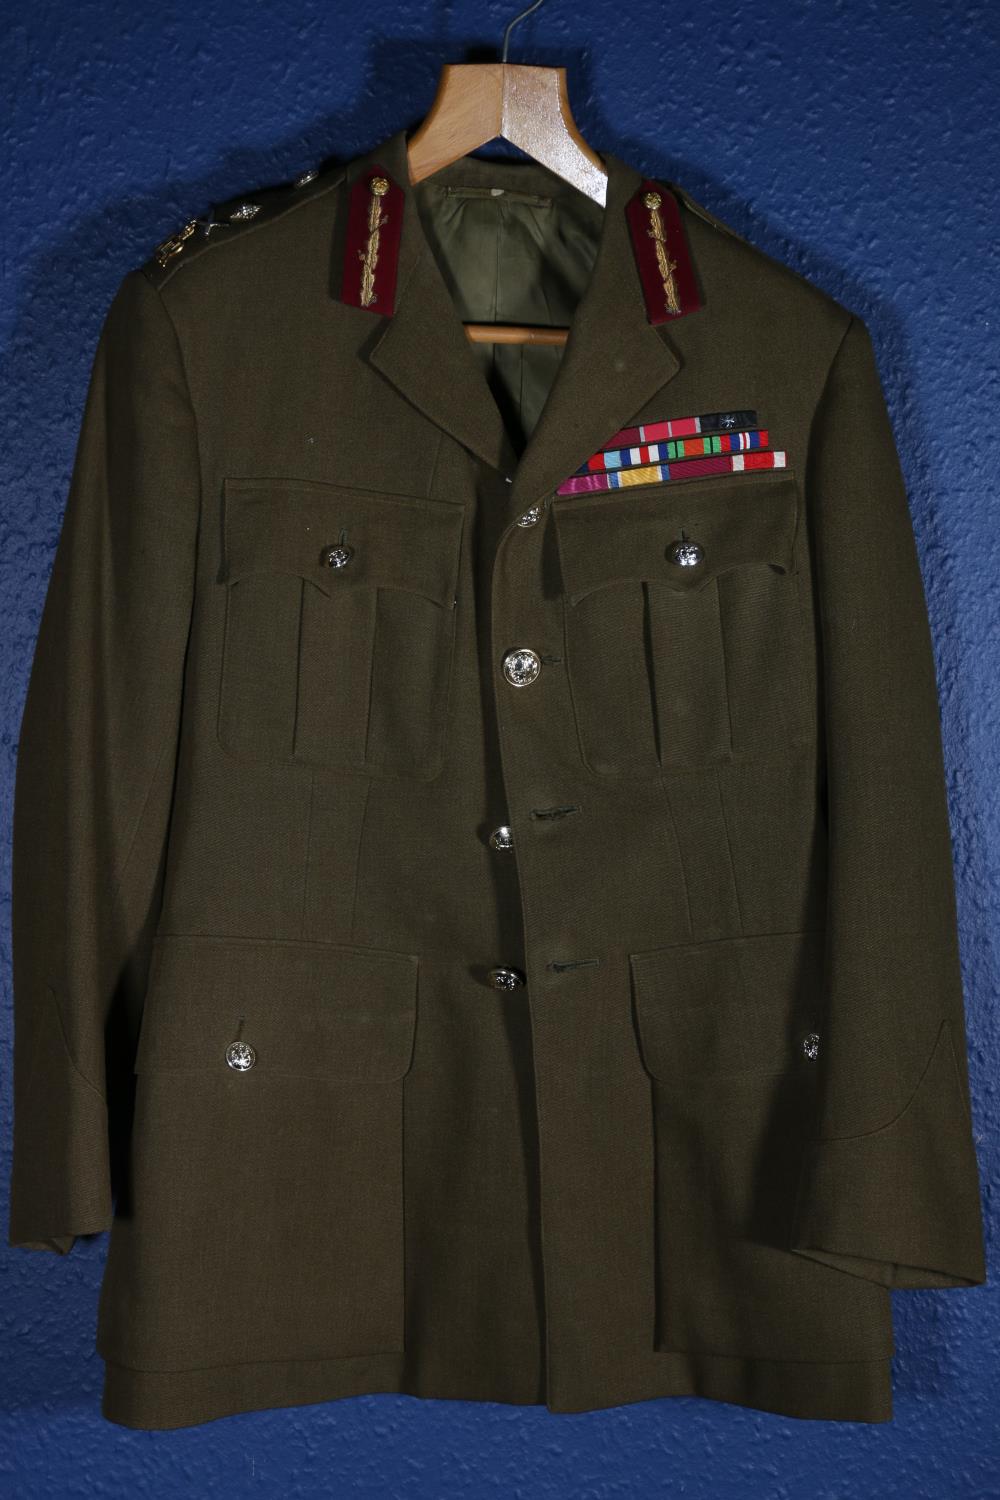 British Army uniform, a British Army khaki green jacket with Bernard Wetherill Ltd of London